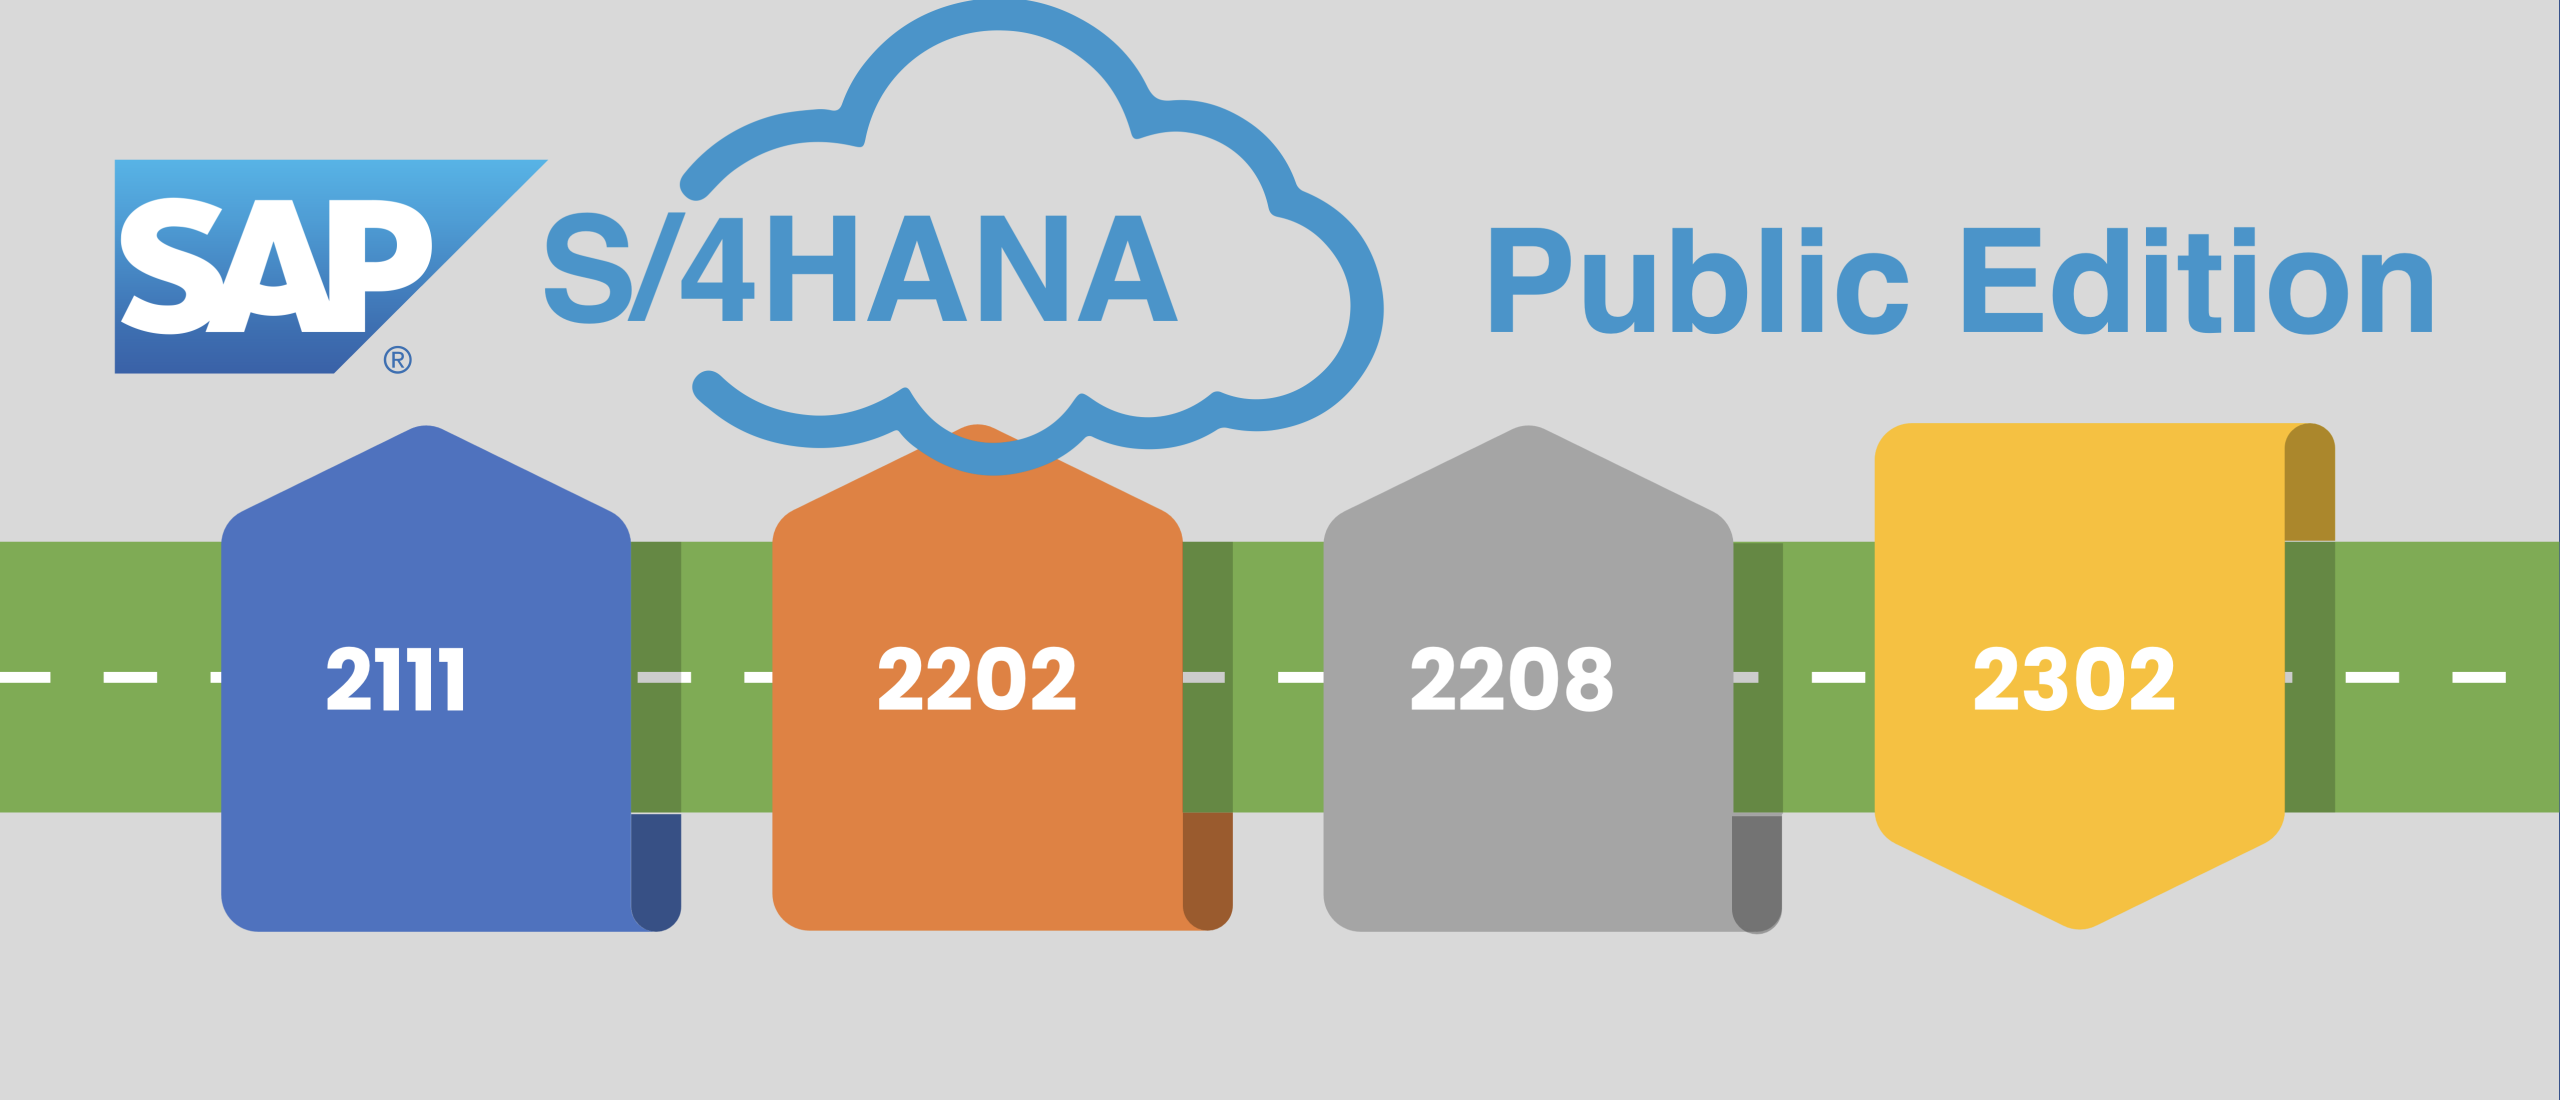 Release update 2302 Public Edition SAP S/4HANA Cloud